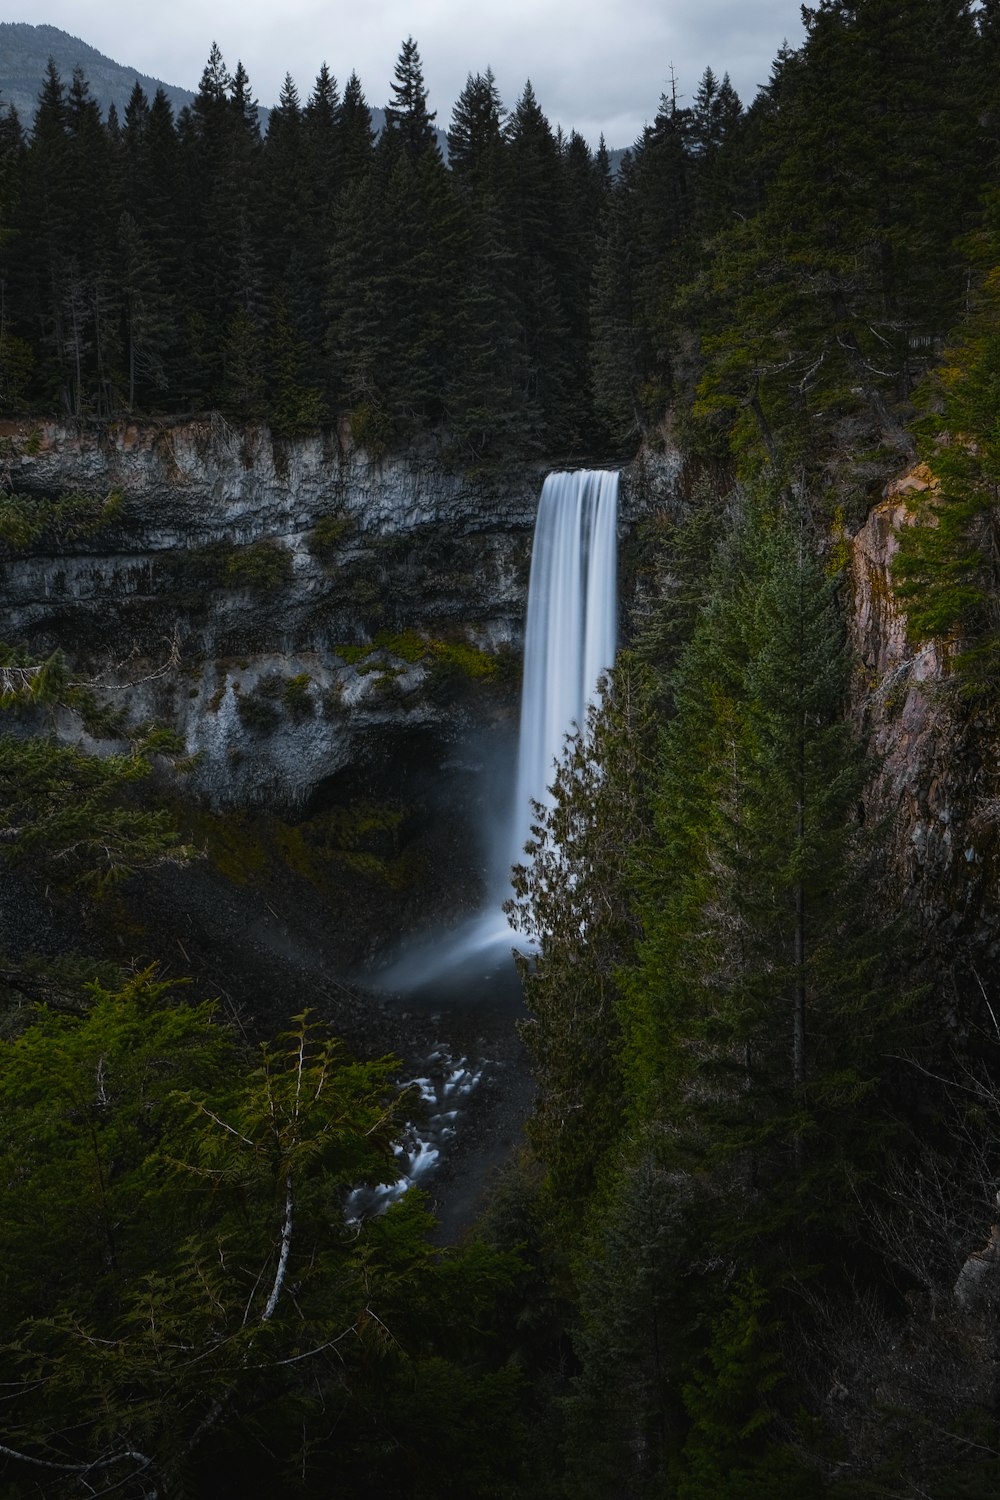 Fotografía time-lapse de cascadas junto a árboles bajo cielos grises